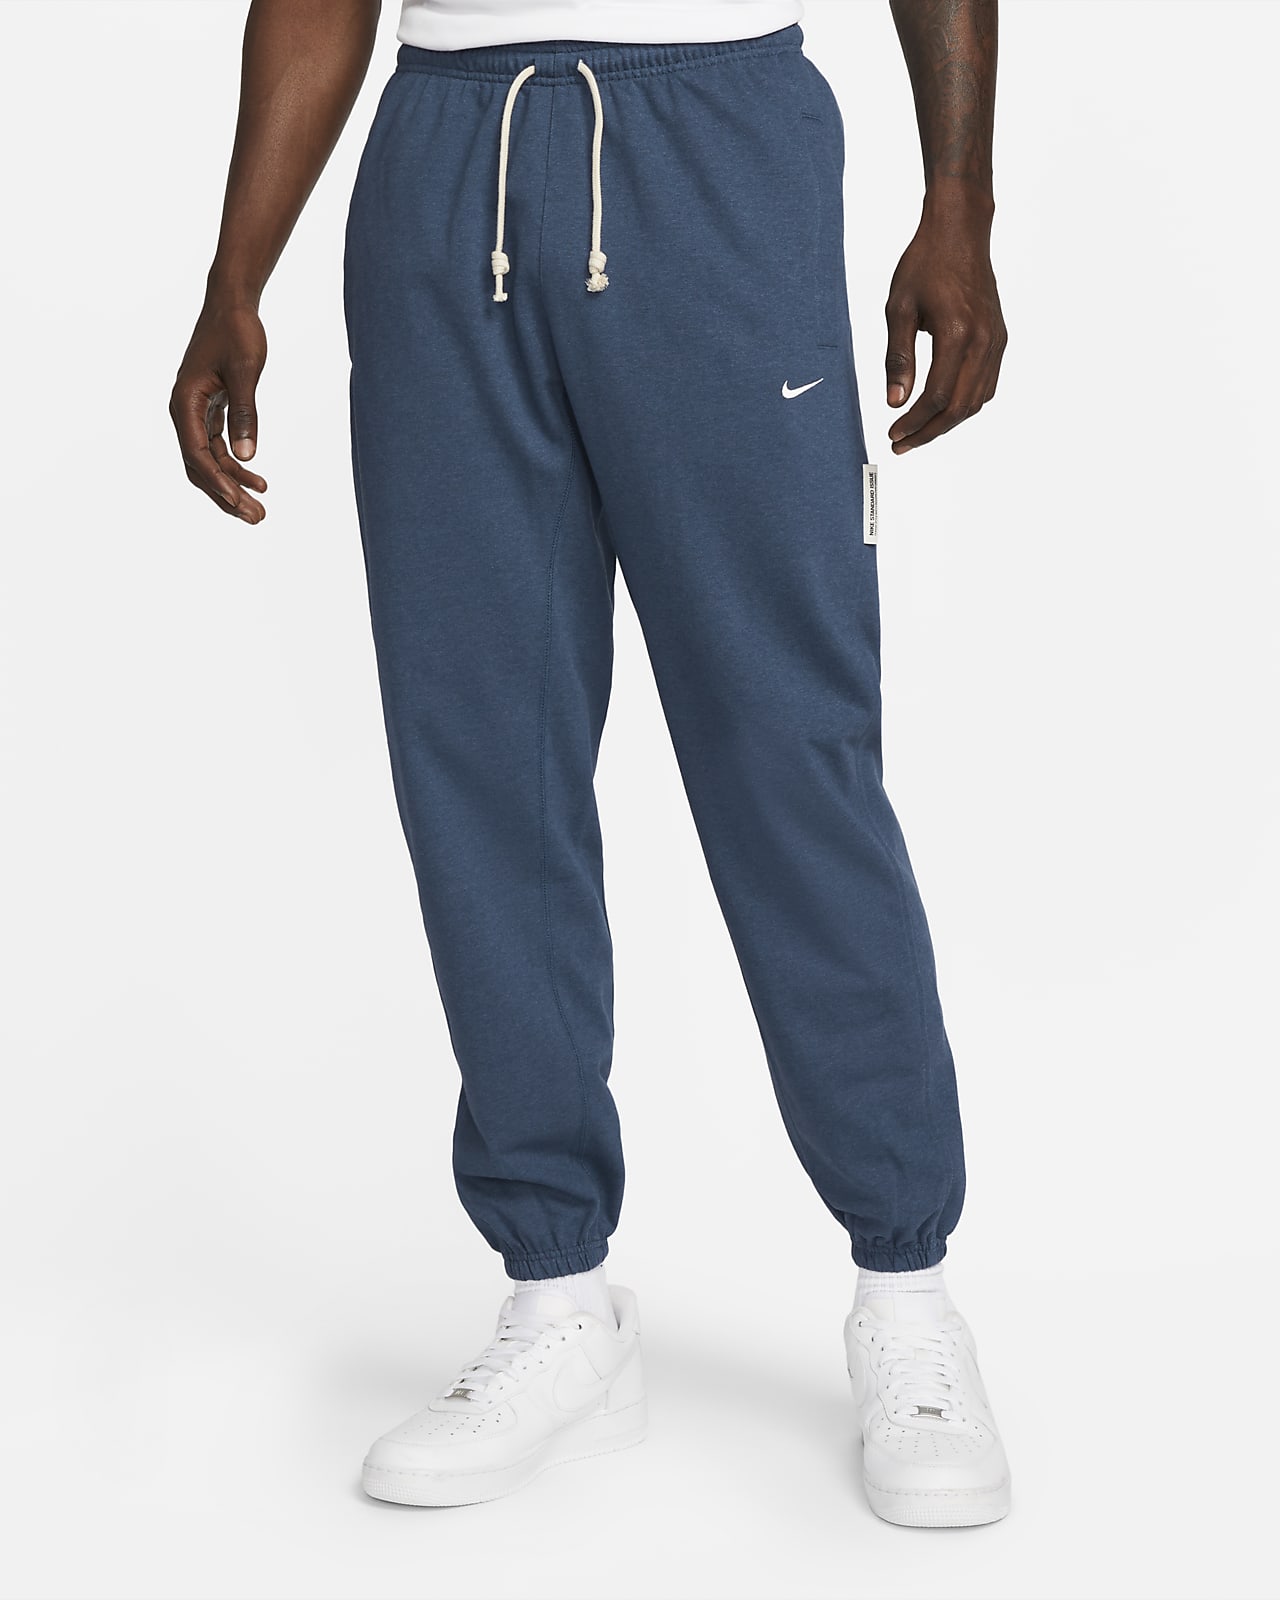 Nike Dri-FIT Standard Issue Men's Basketball Trousers